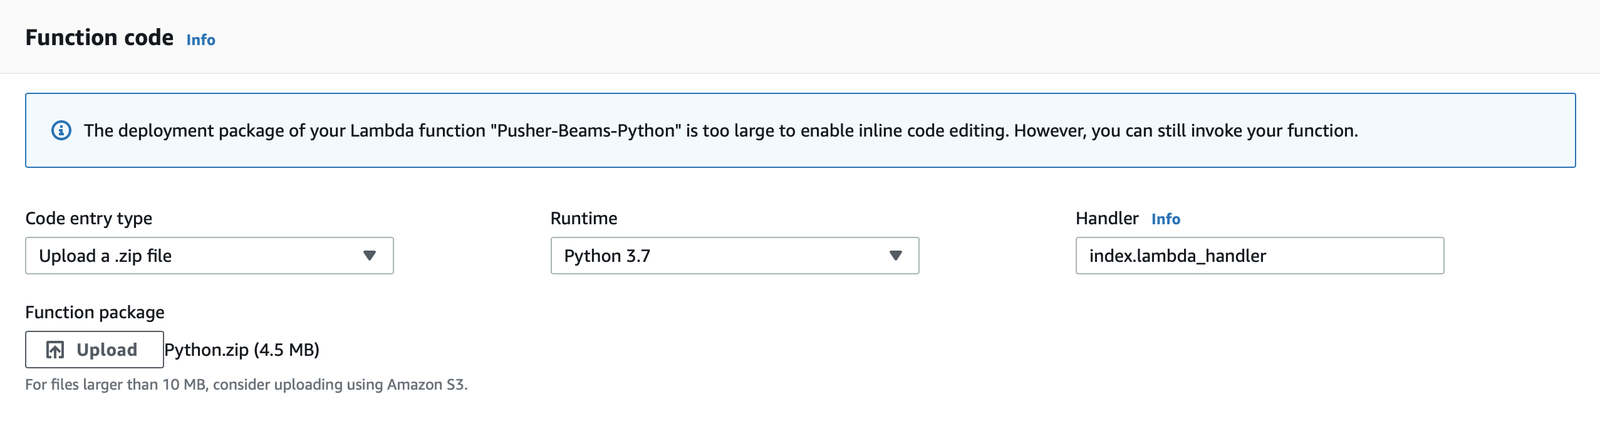 lambda-android-aws-function-code-python